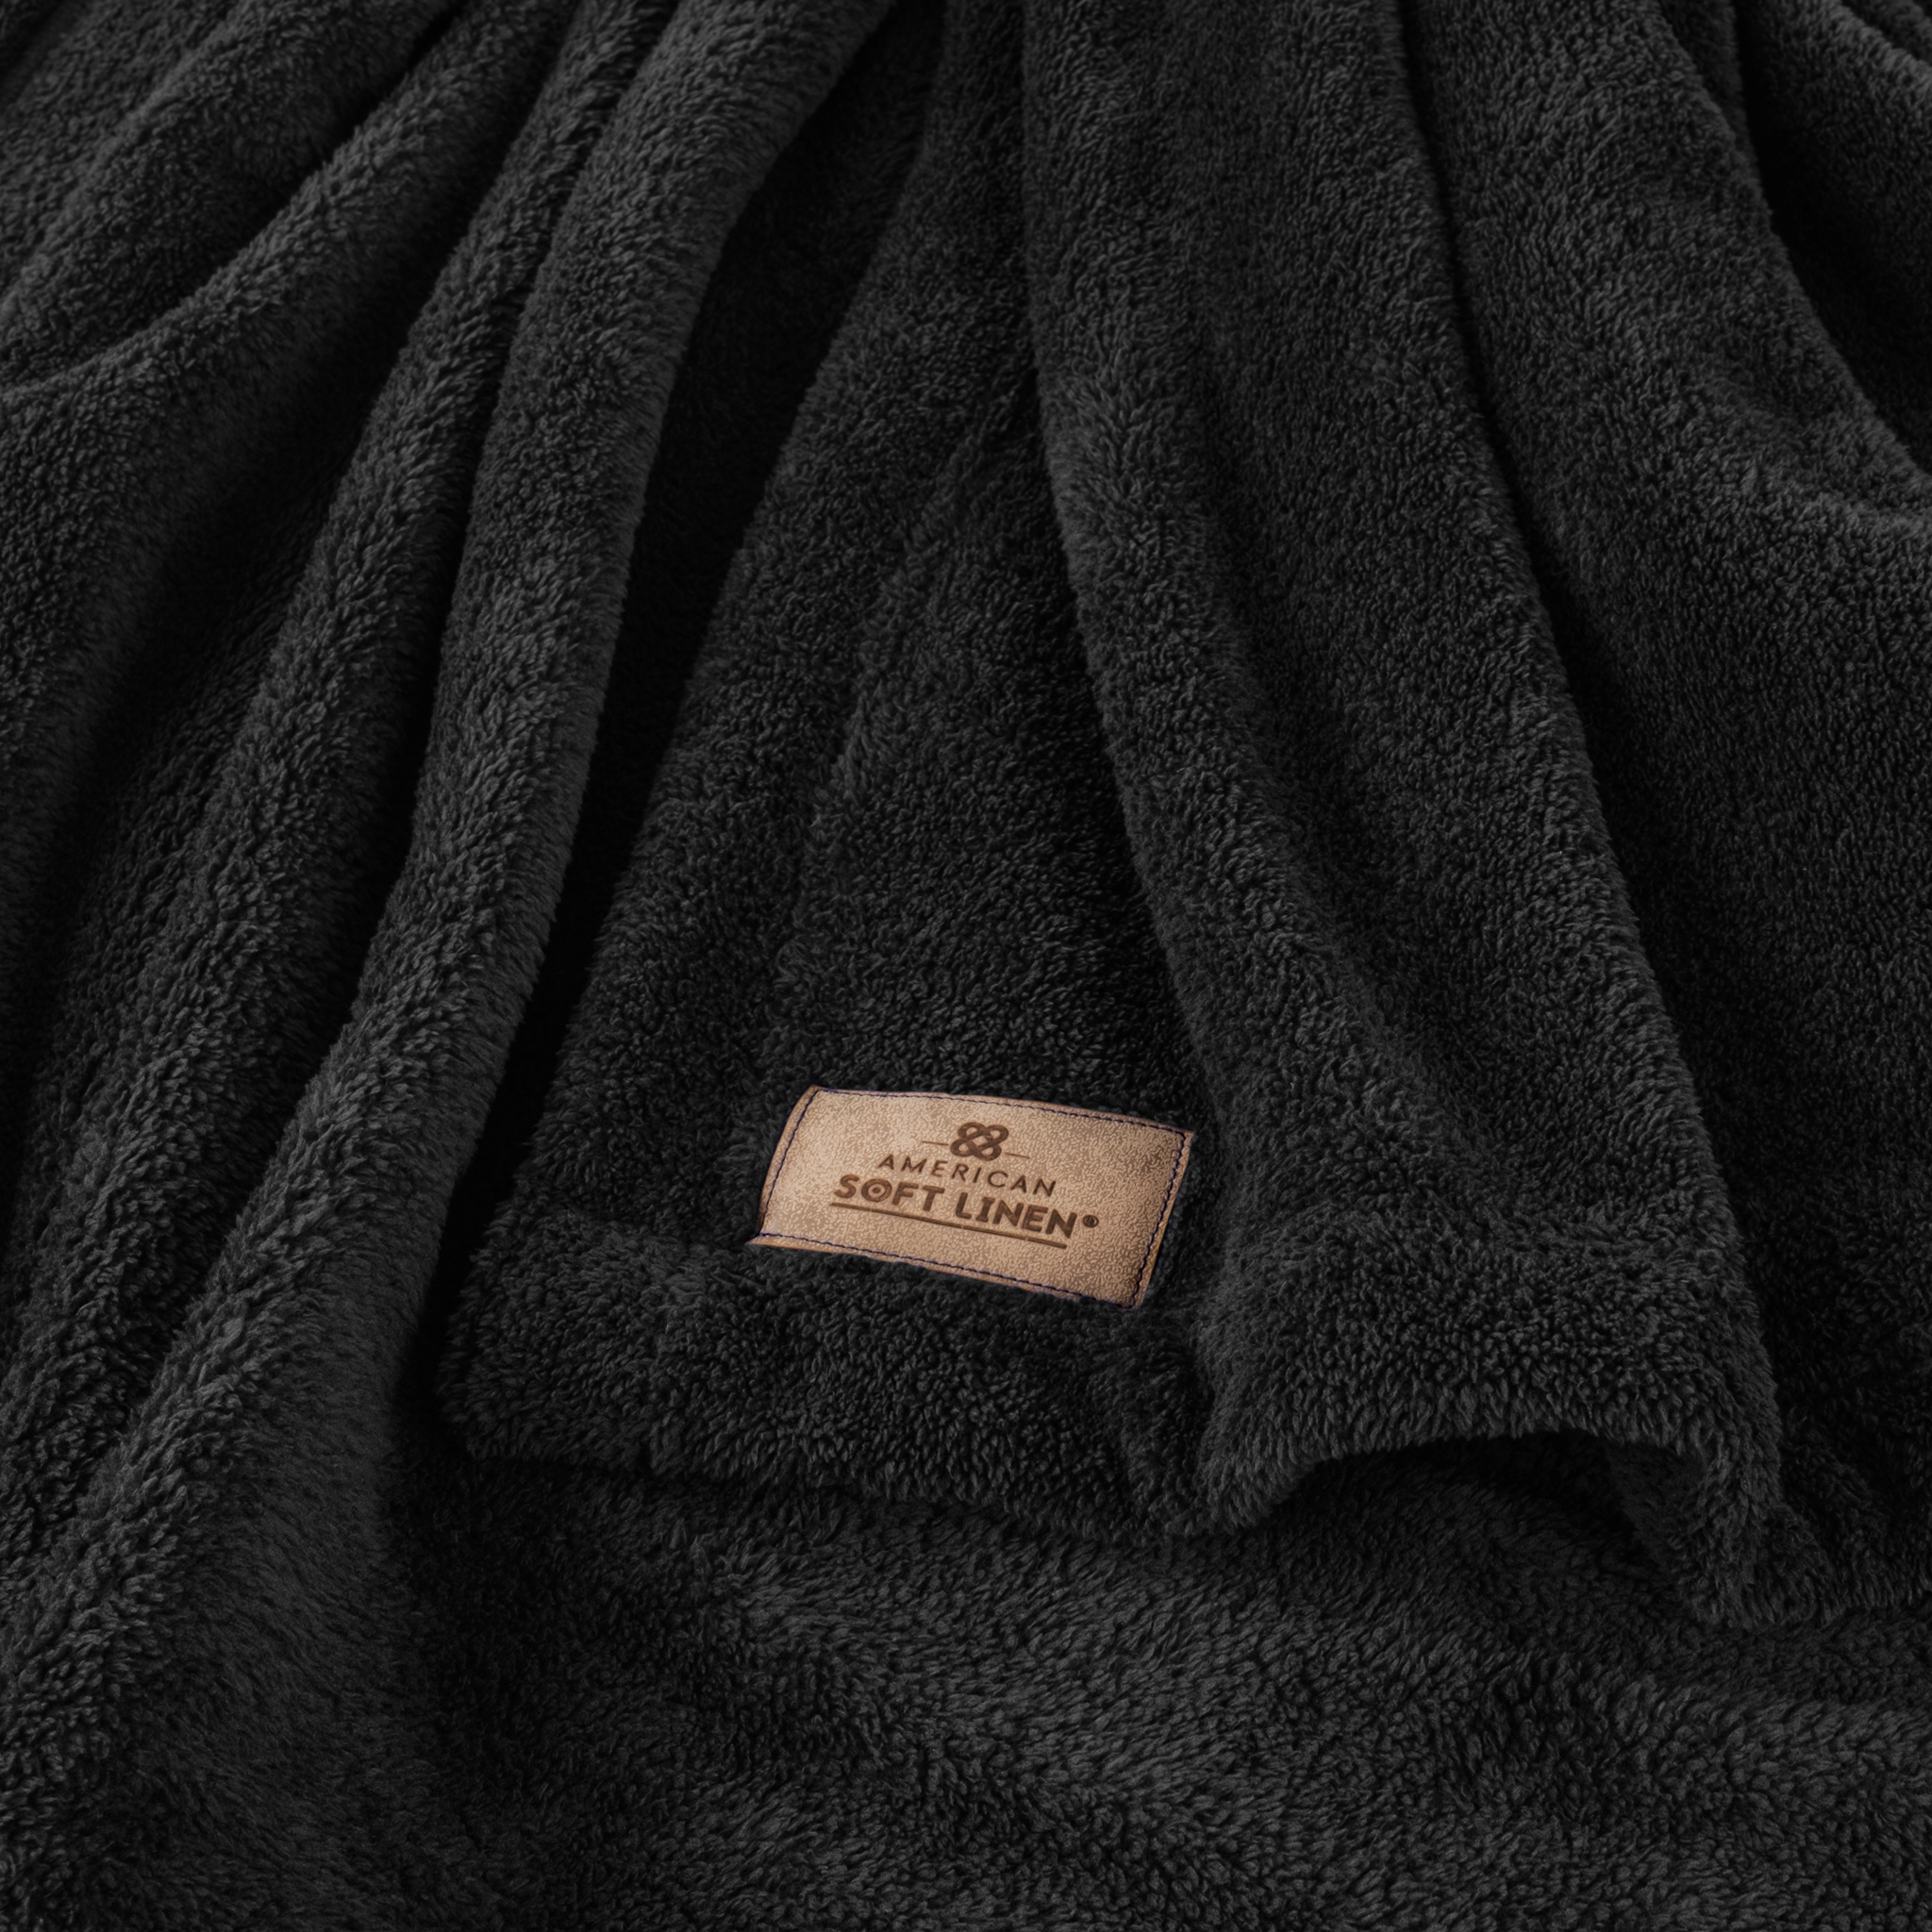 American Soft Linen - Bedding Fleece Blanket - Wholesale - 9 Set Case Pack - Queen Size 85x90 inches - Black - 4